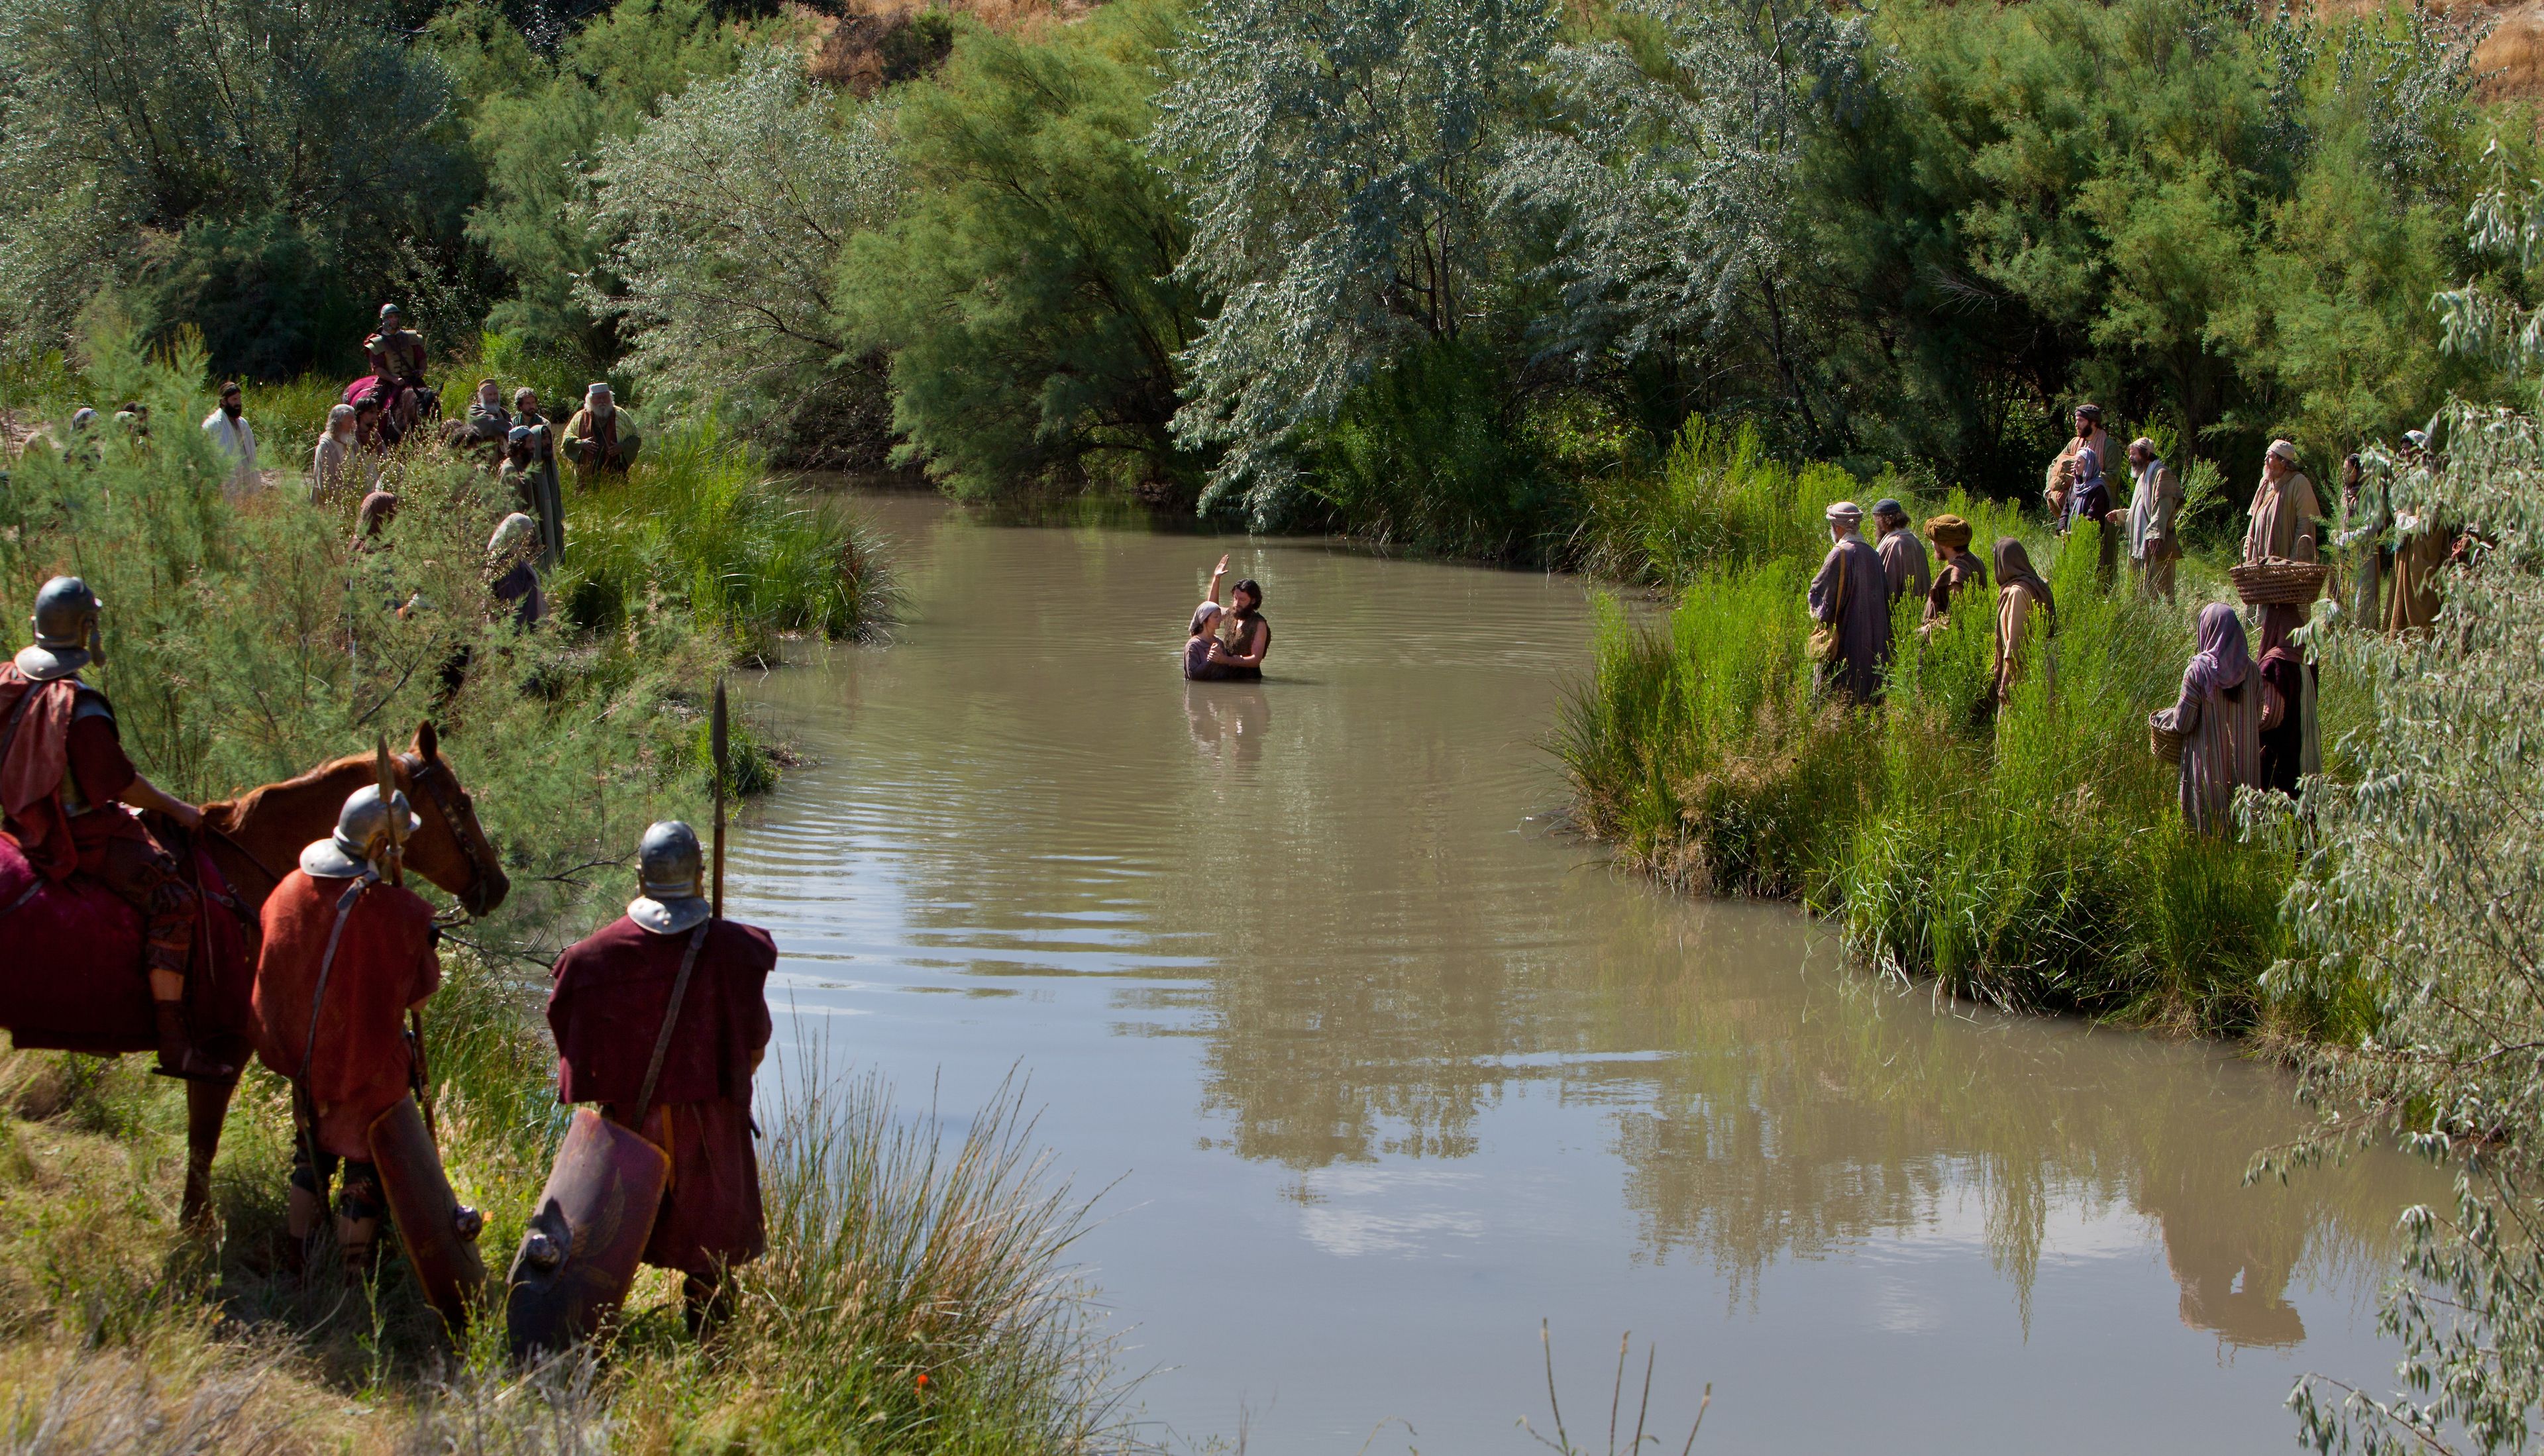 John baptizes men and women in the River Jordan.